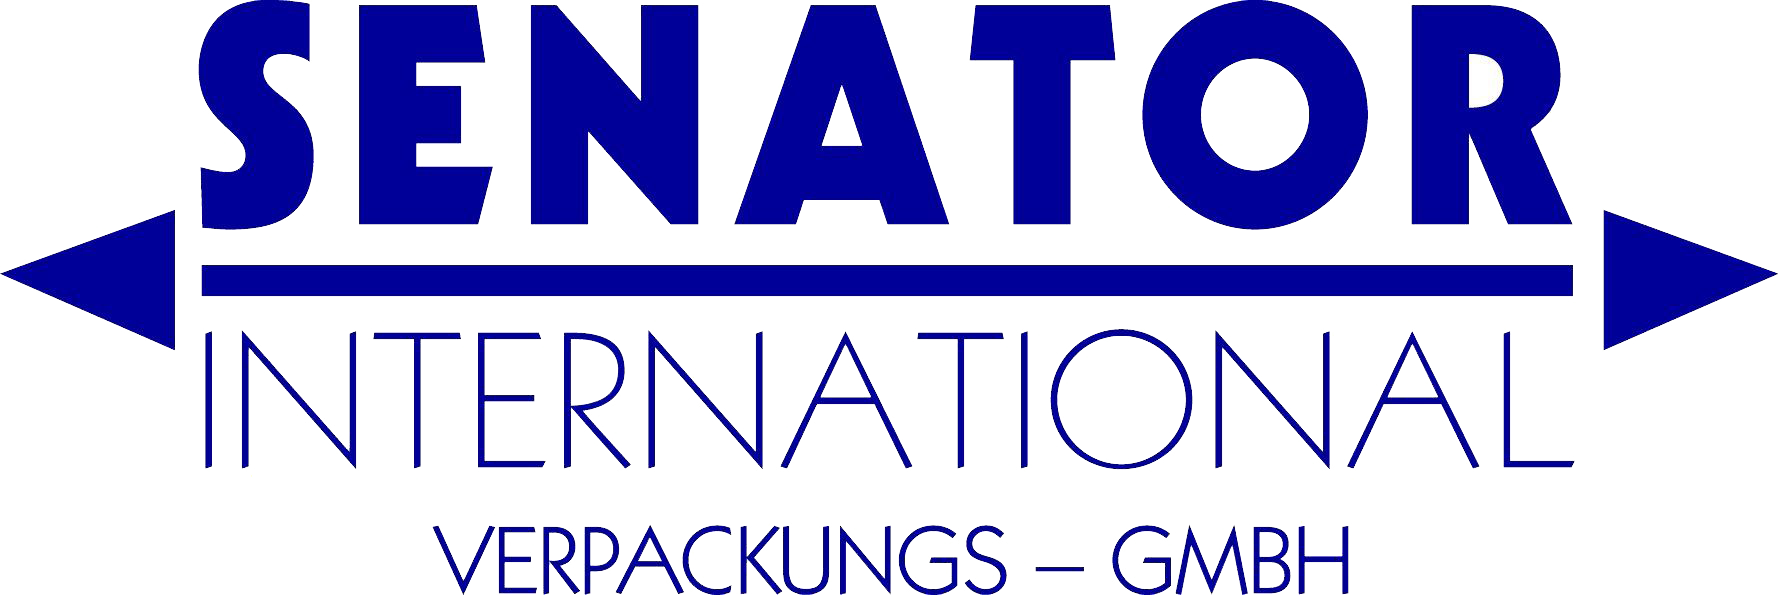 SENATOR INTERNATIONAL Verpackungs GmbH